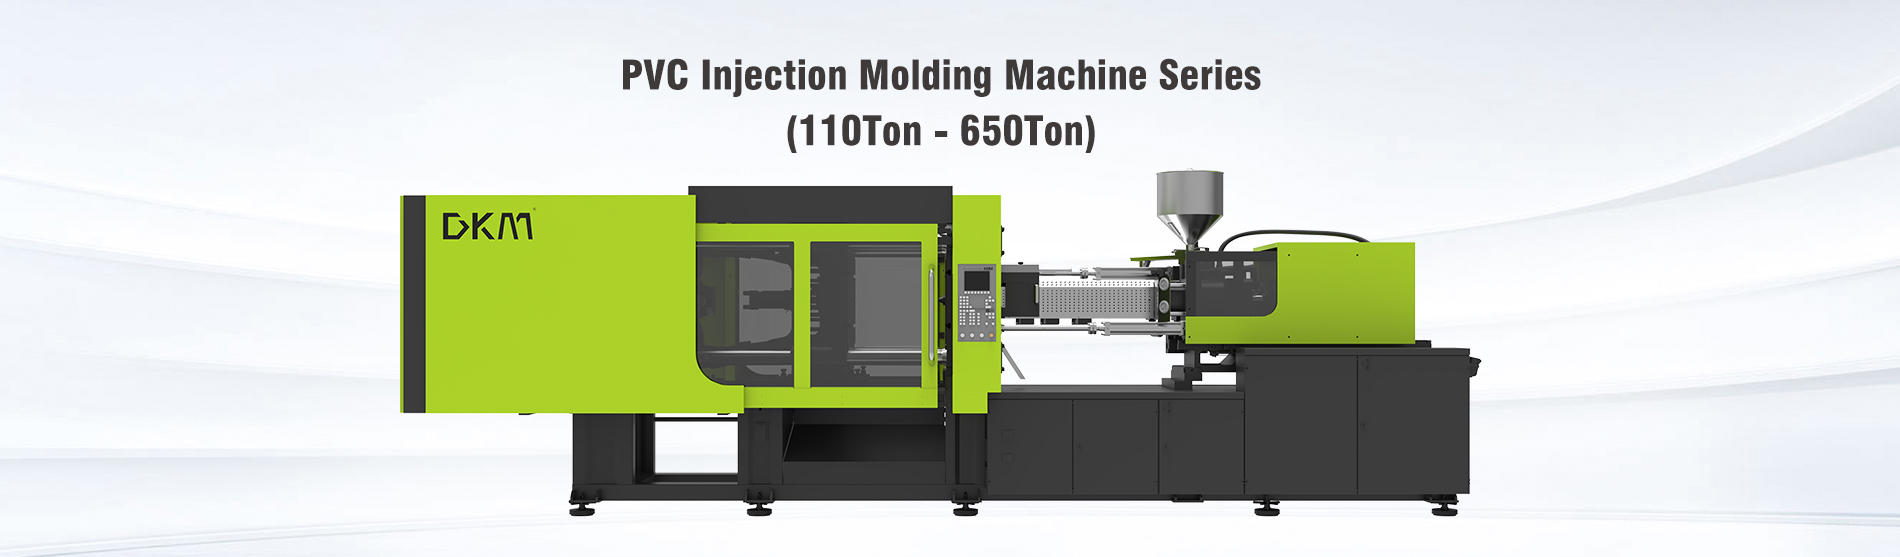 PVC Injection Molding Machine